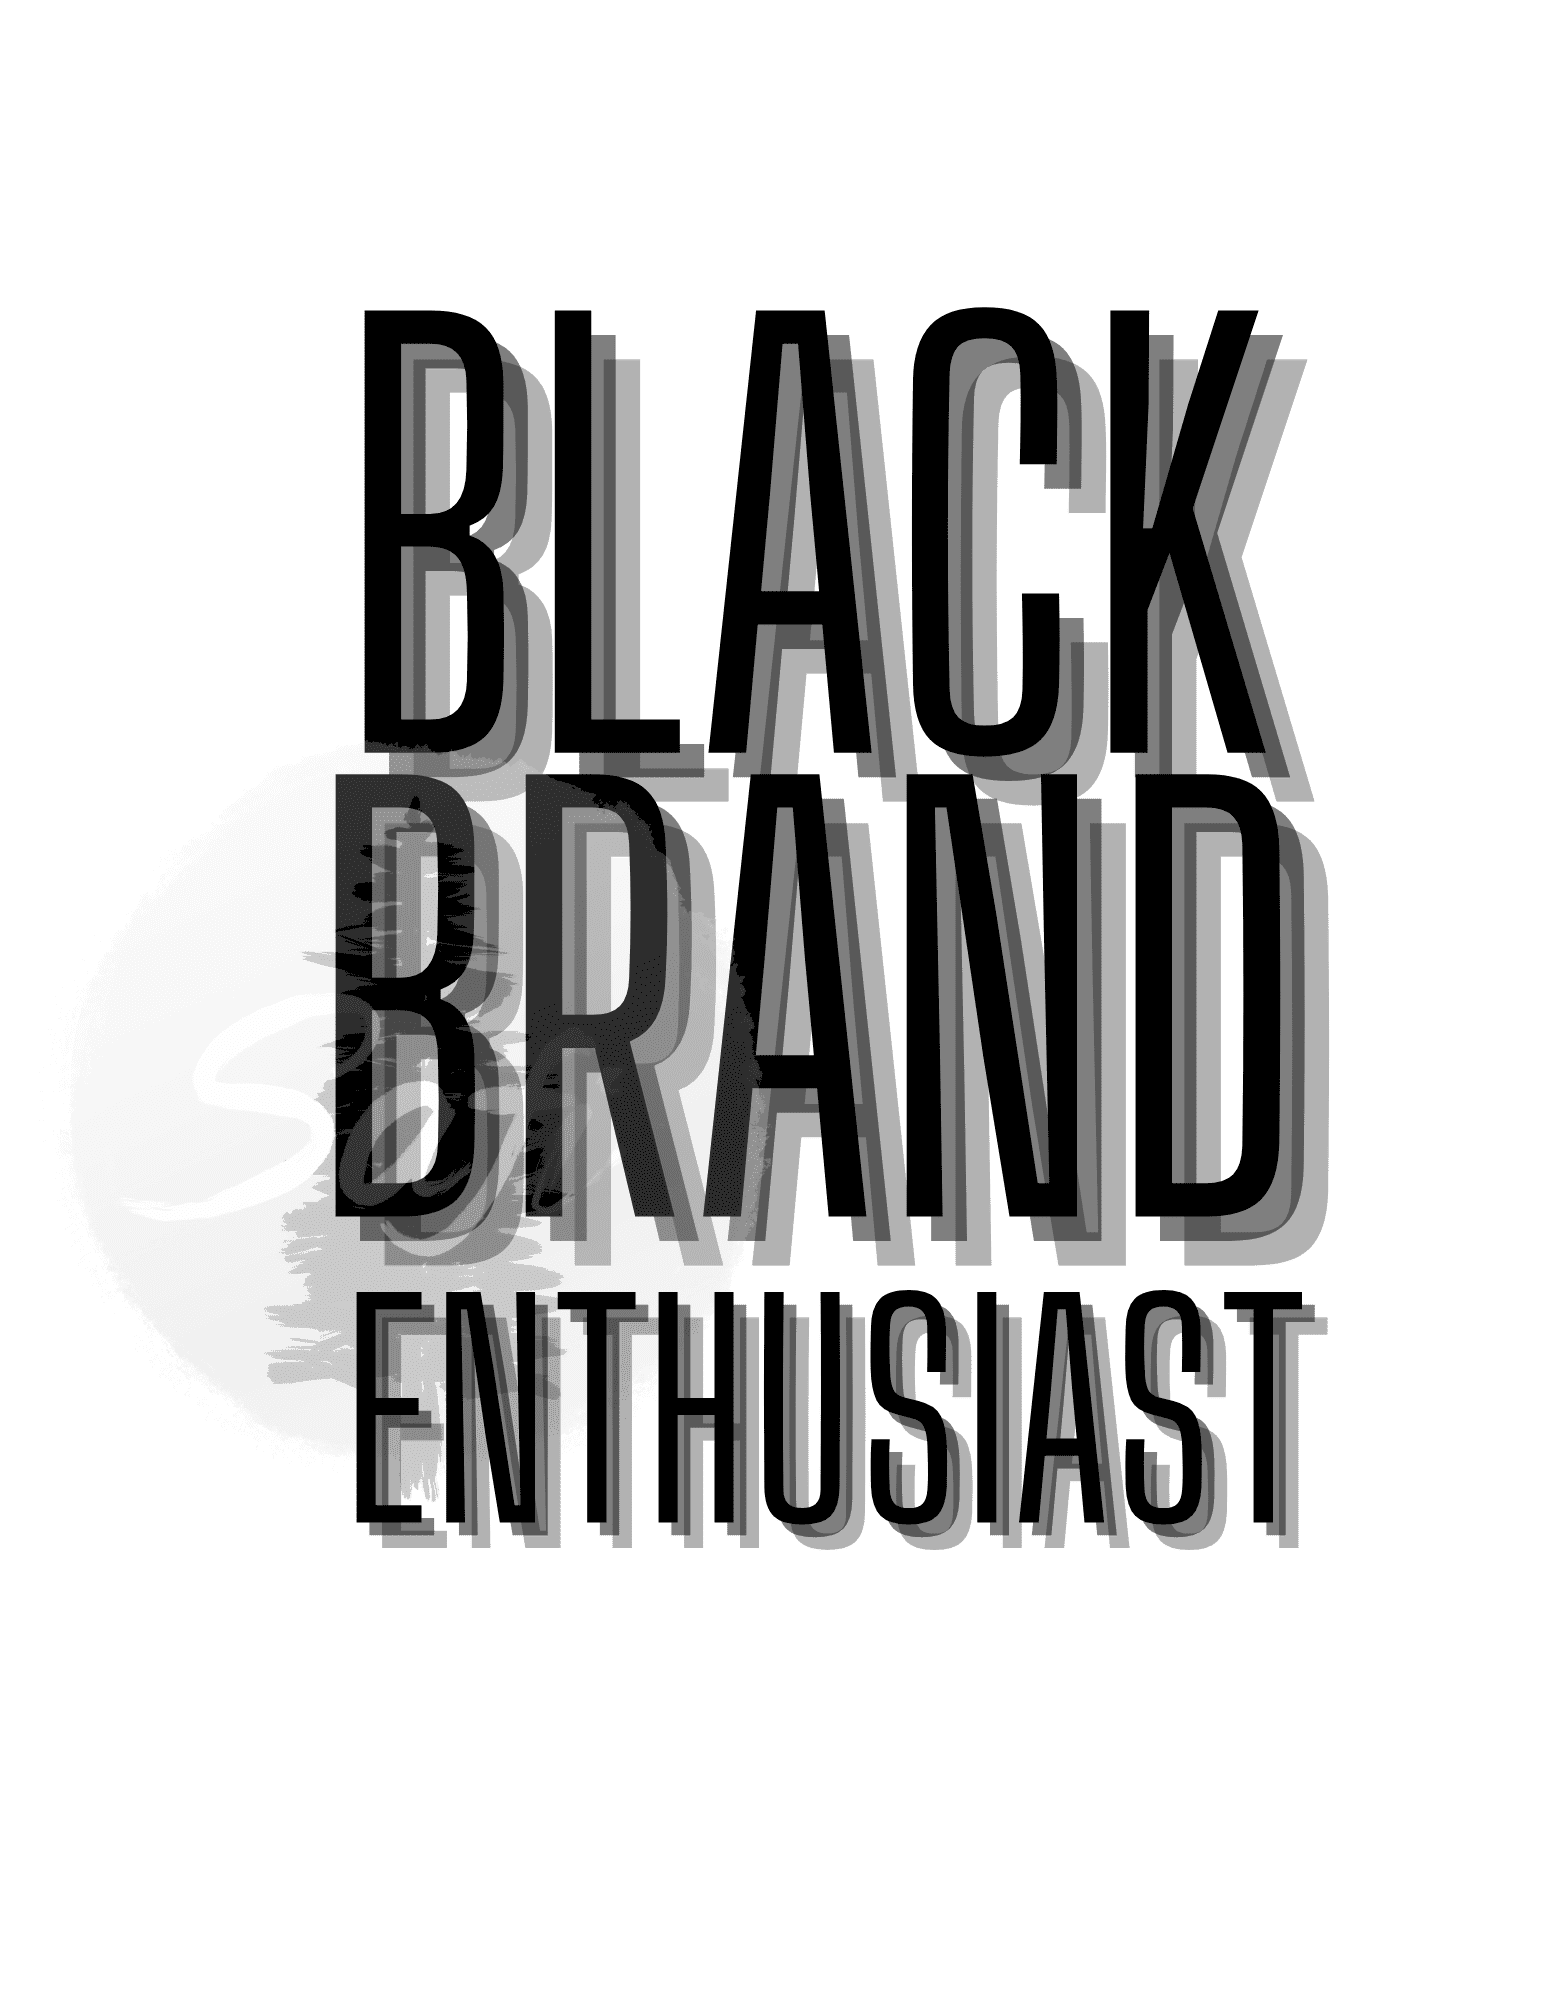 Black Brand Enthusiast Tshirt logo on a white background.